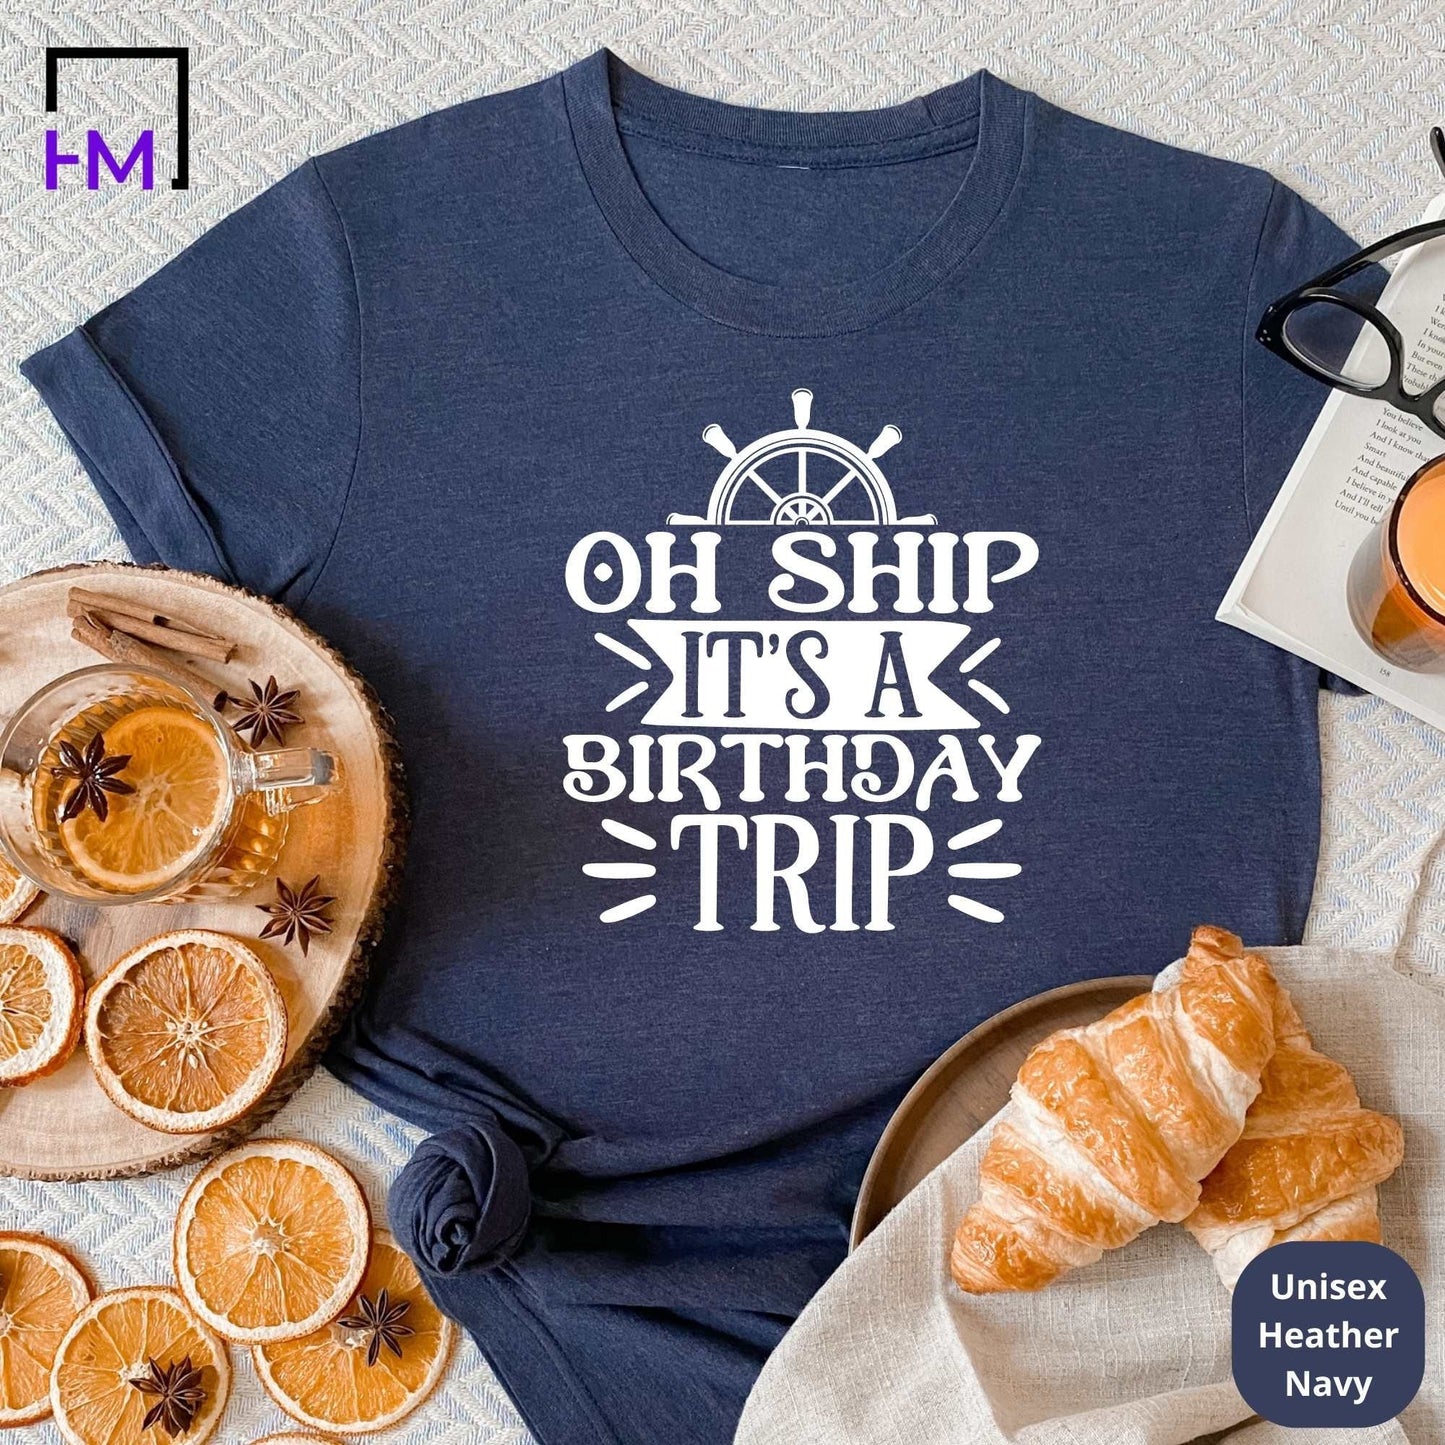 Oh Ship Its a Birthday Trip, Birthday Cruise Shirts